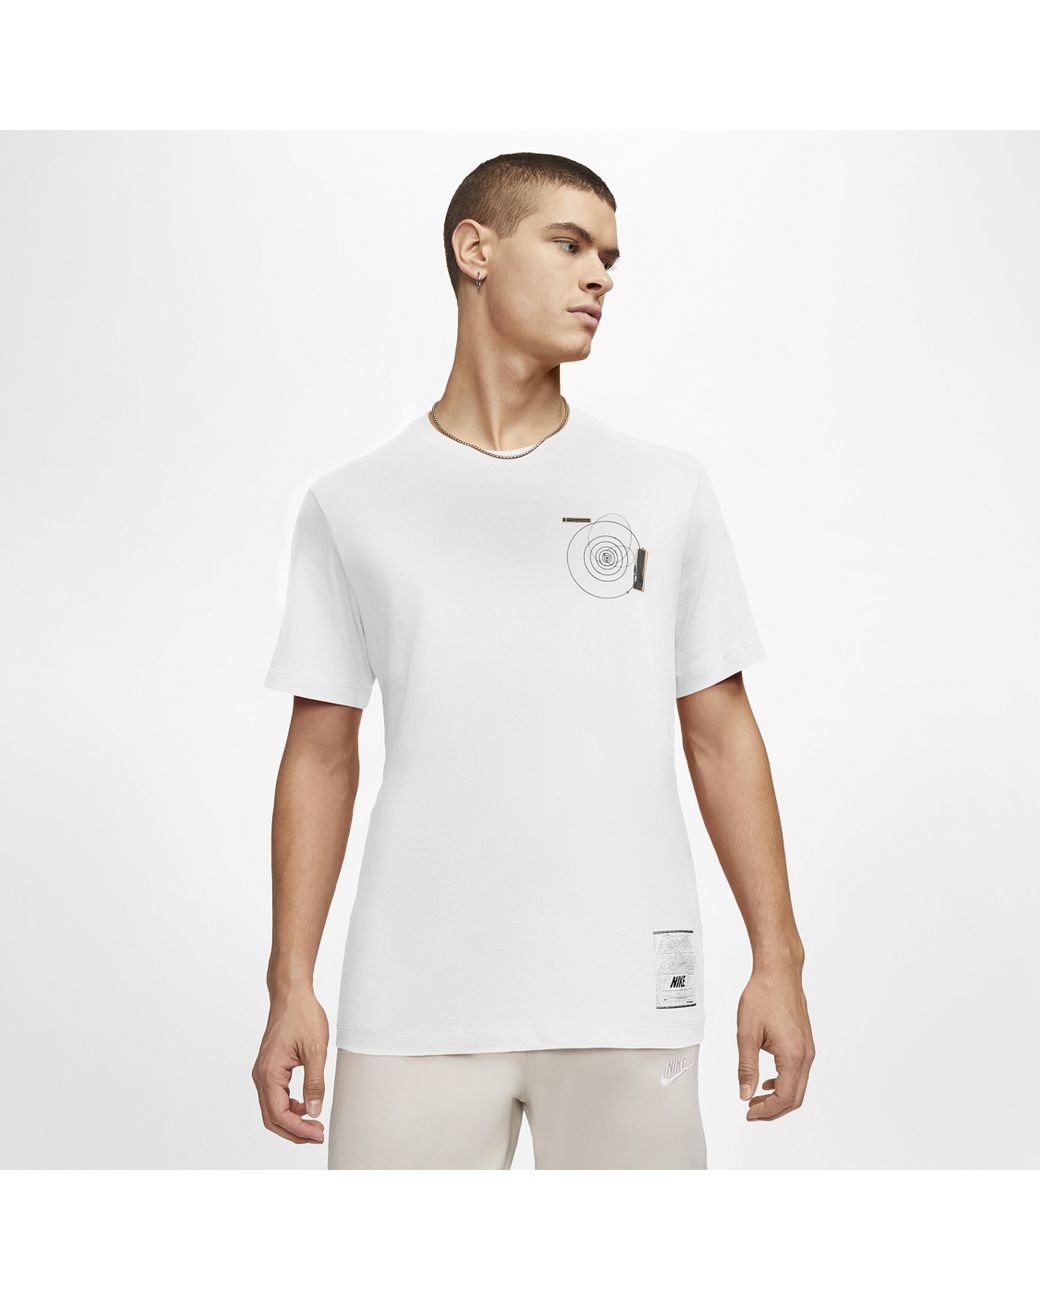 Nike Cotton Sn. 2020 T-shirt in White/Black (White) for Men - Lyst